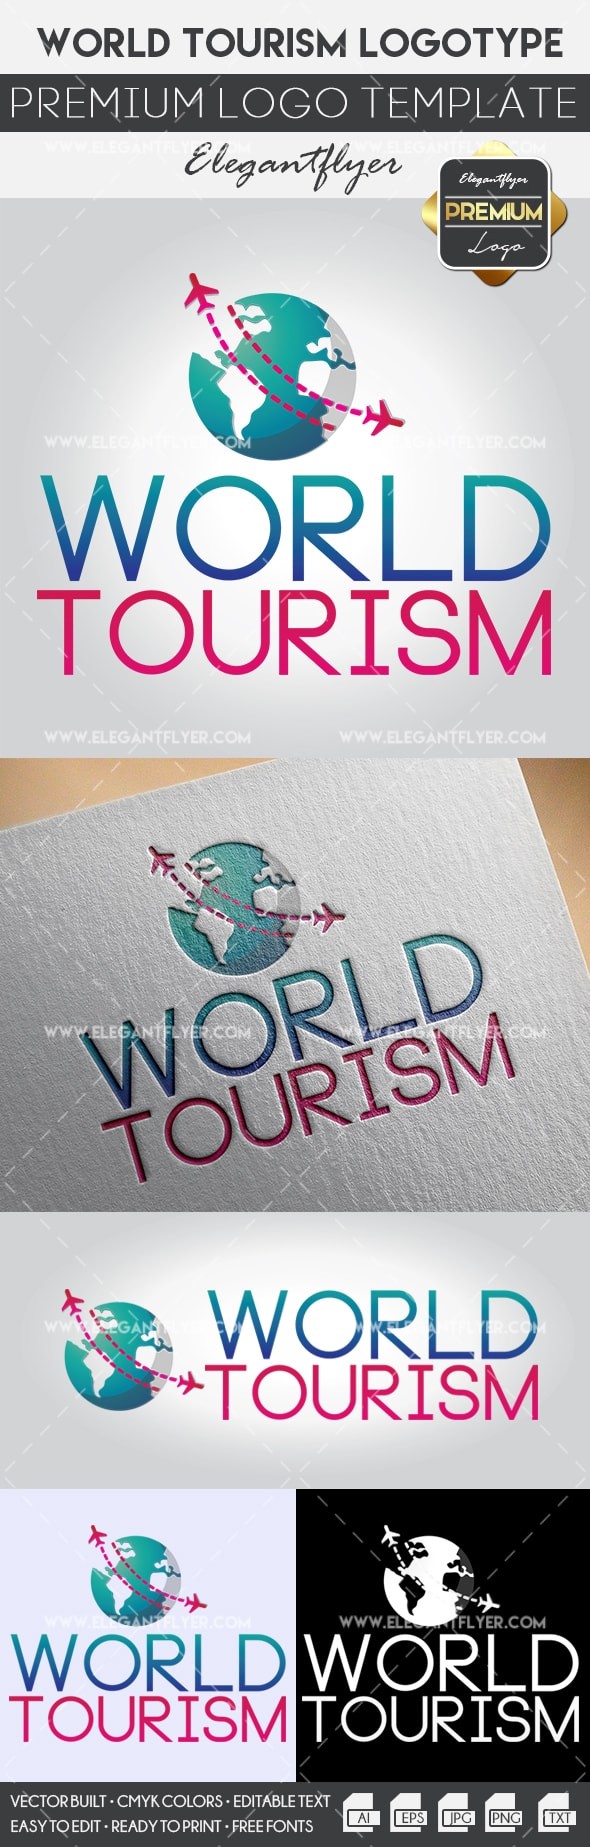 World Tourism by ElegantFlyer